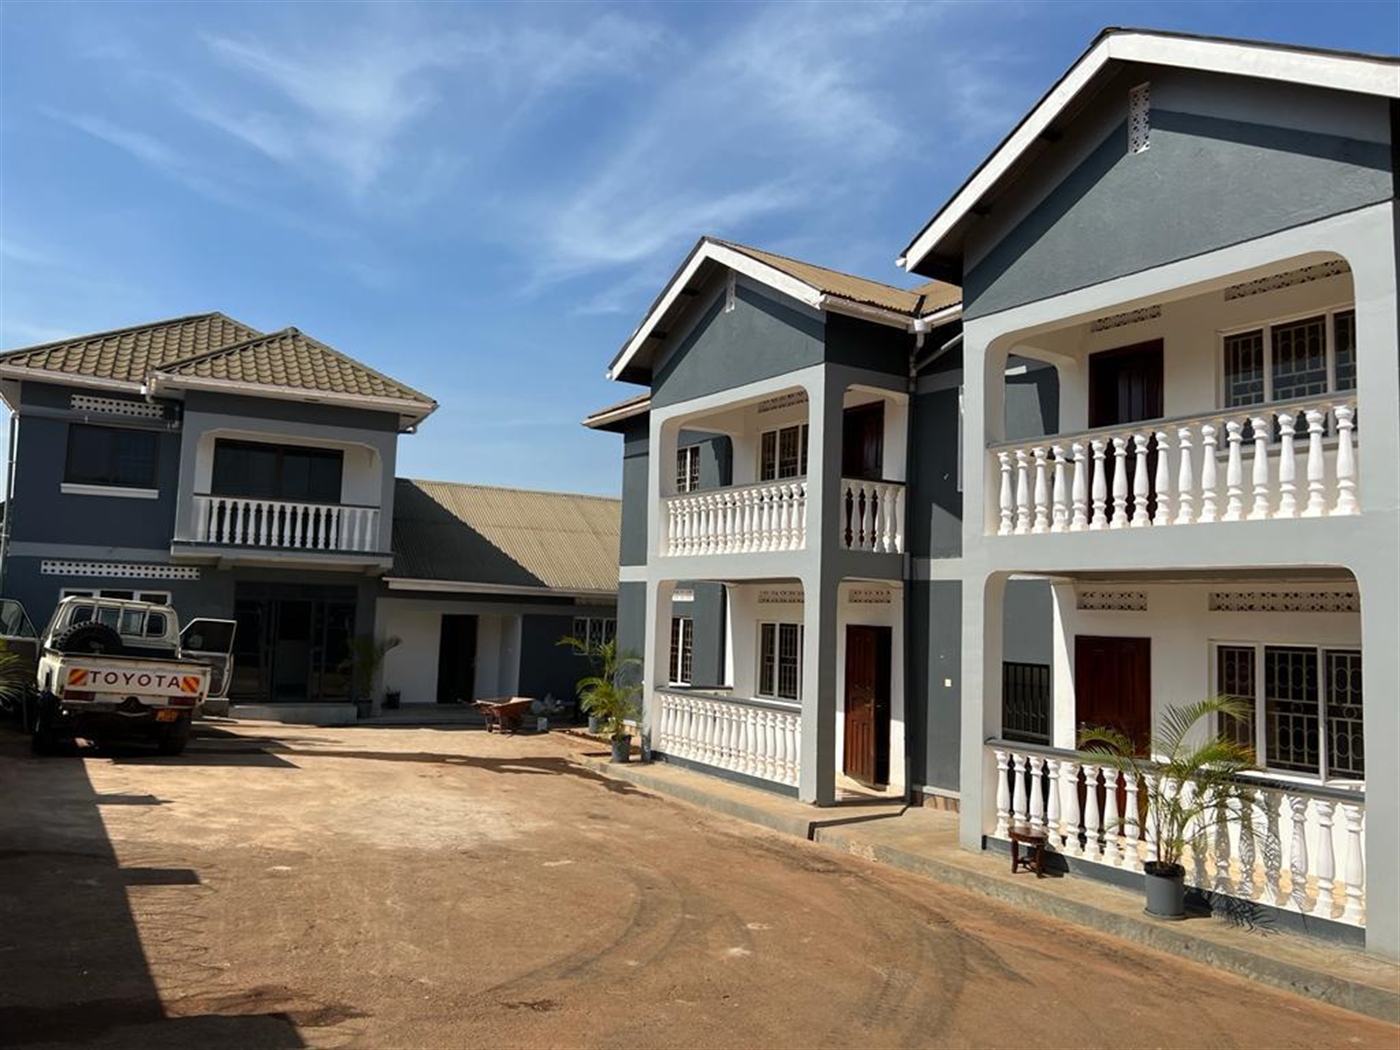 Apartment block for sale in Kiwatula Kampala